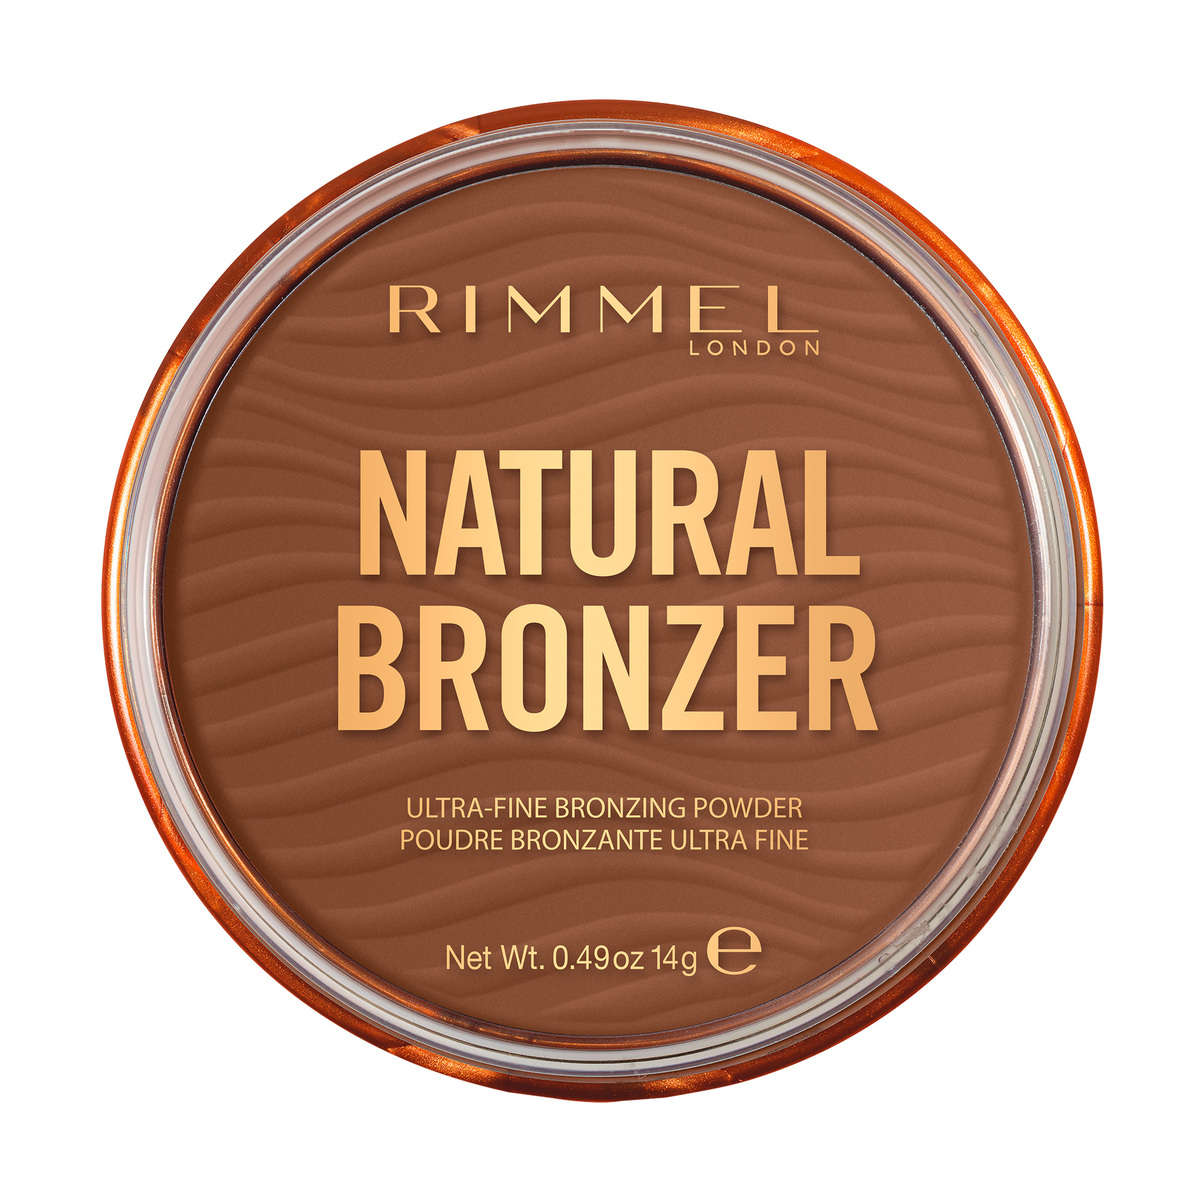 Rimmel London Natural Bronzer, 004 Sunbathe, 14 g - 0.49 fl oz